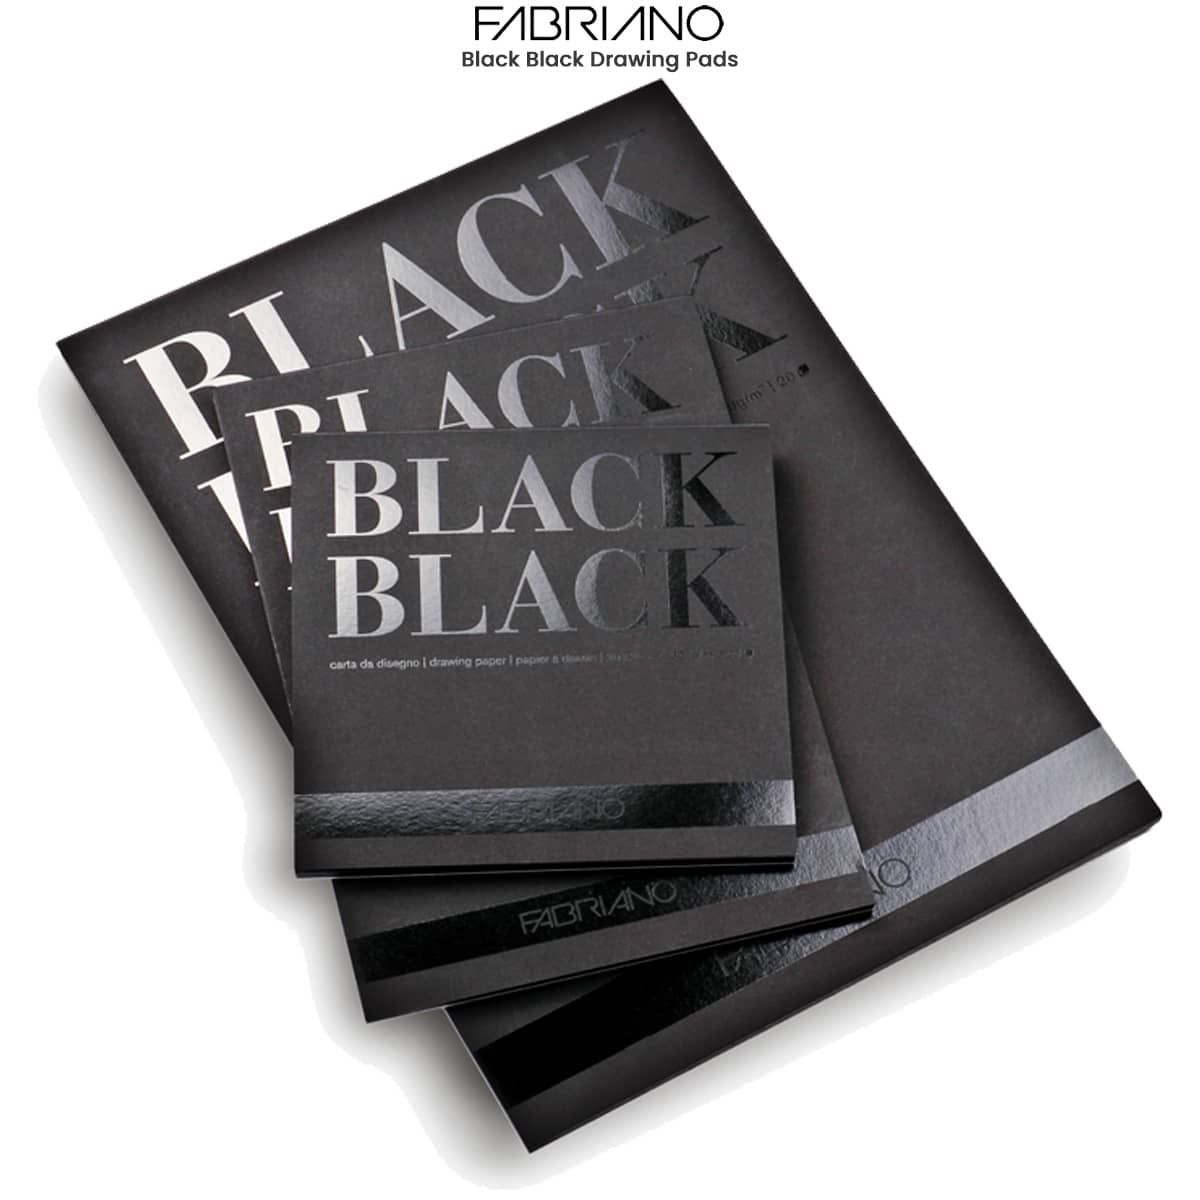 Black Black Drawing Pads